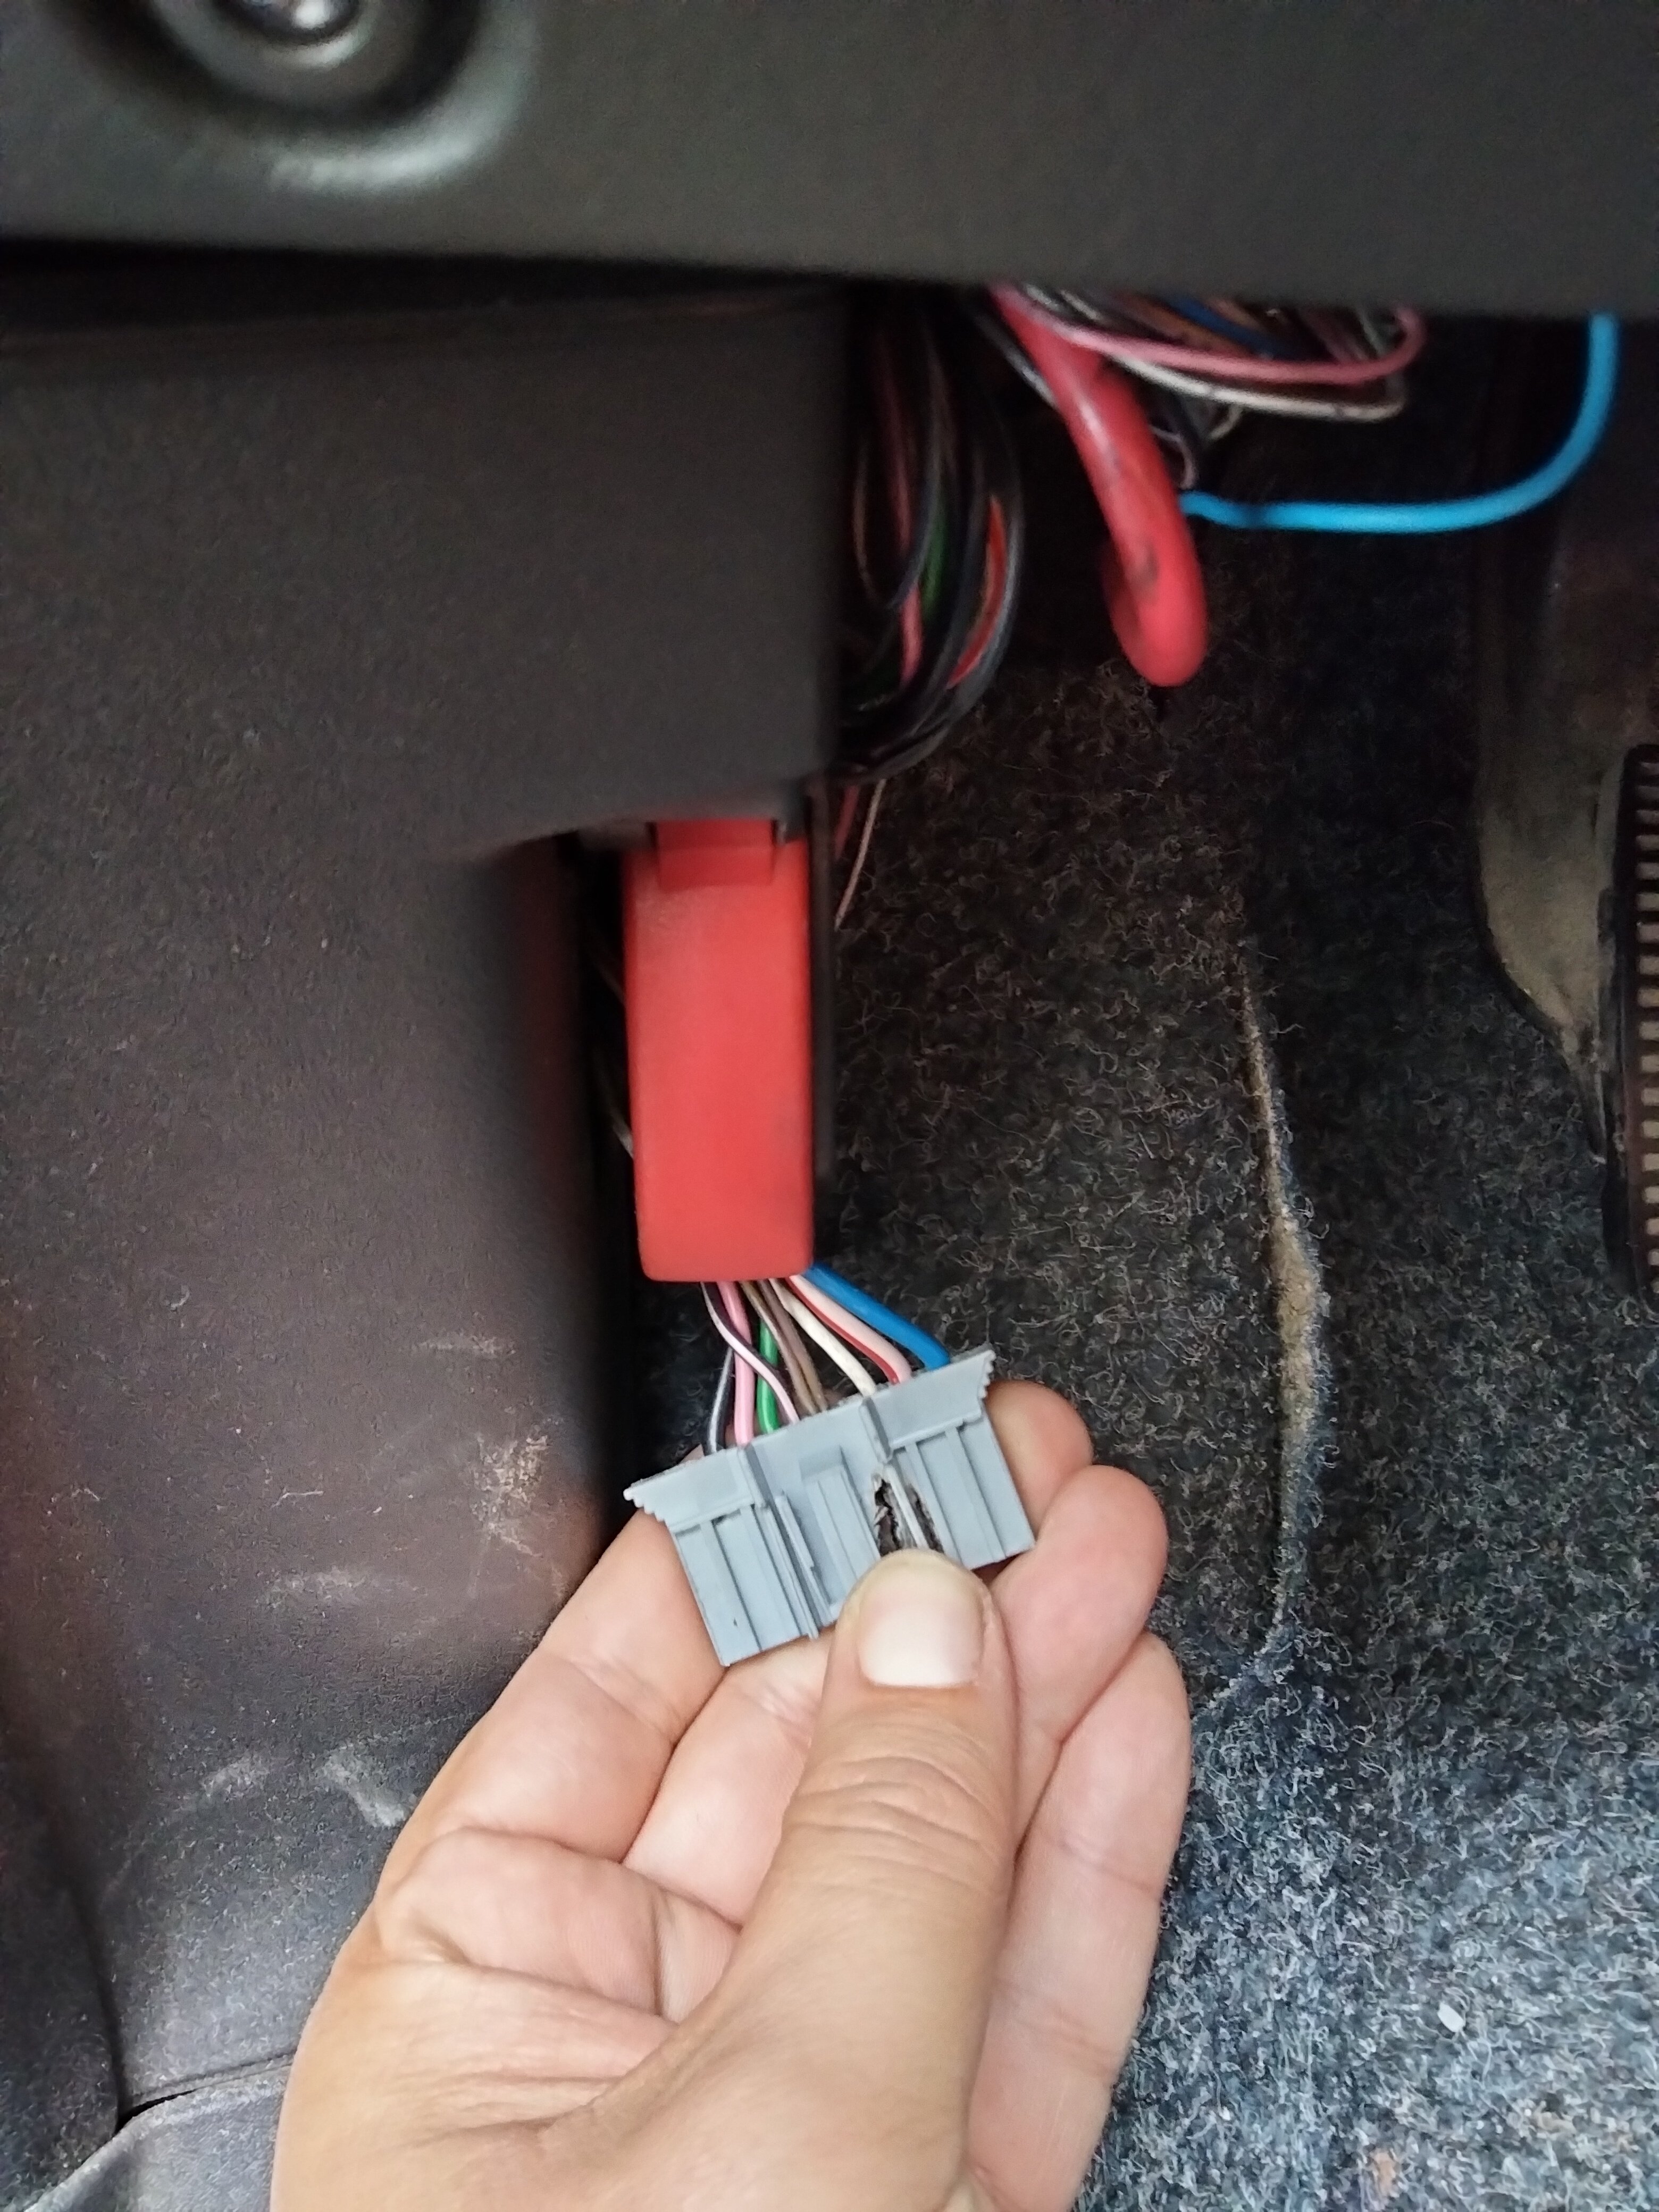 Fix Fiat Panda 169 Single Headlight Problem / Repair Wiring / Complete  Guide 